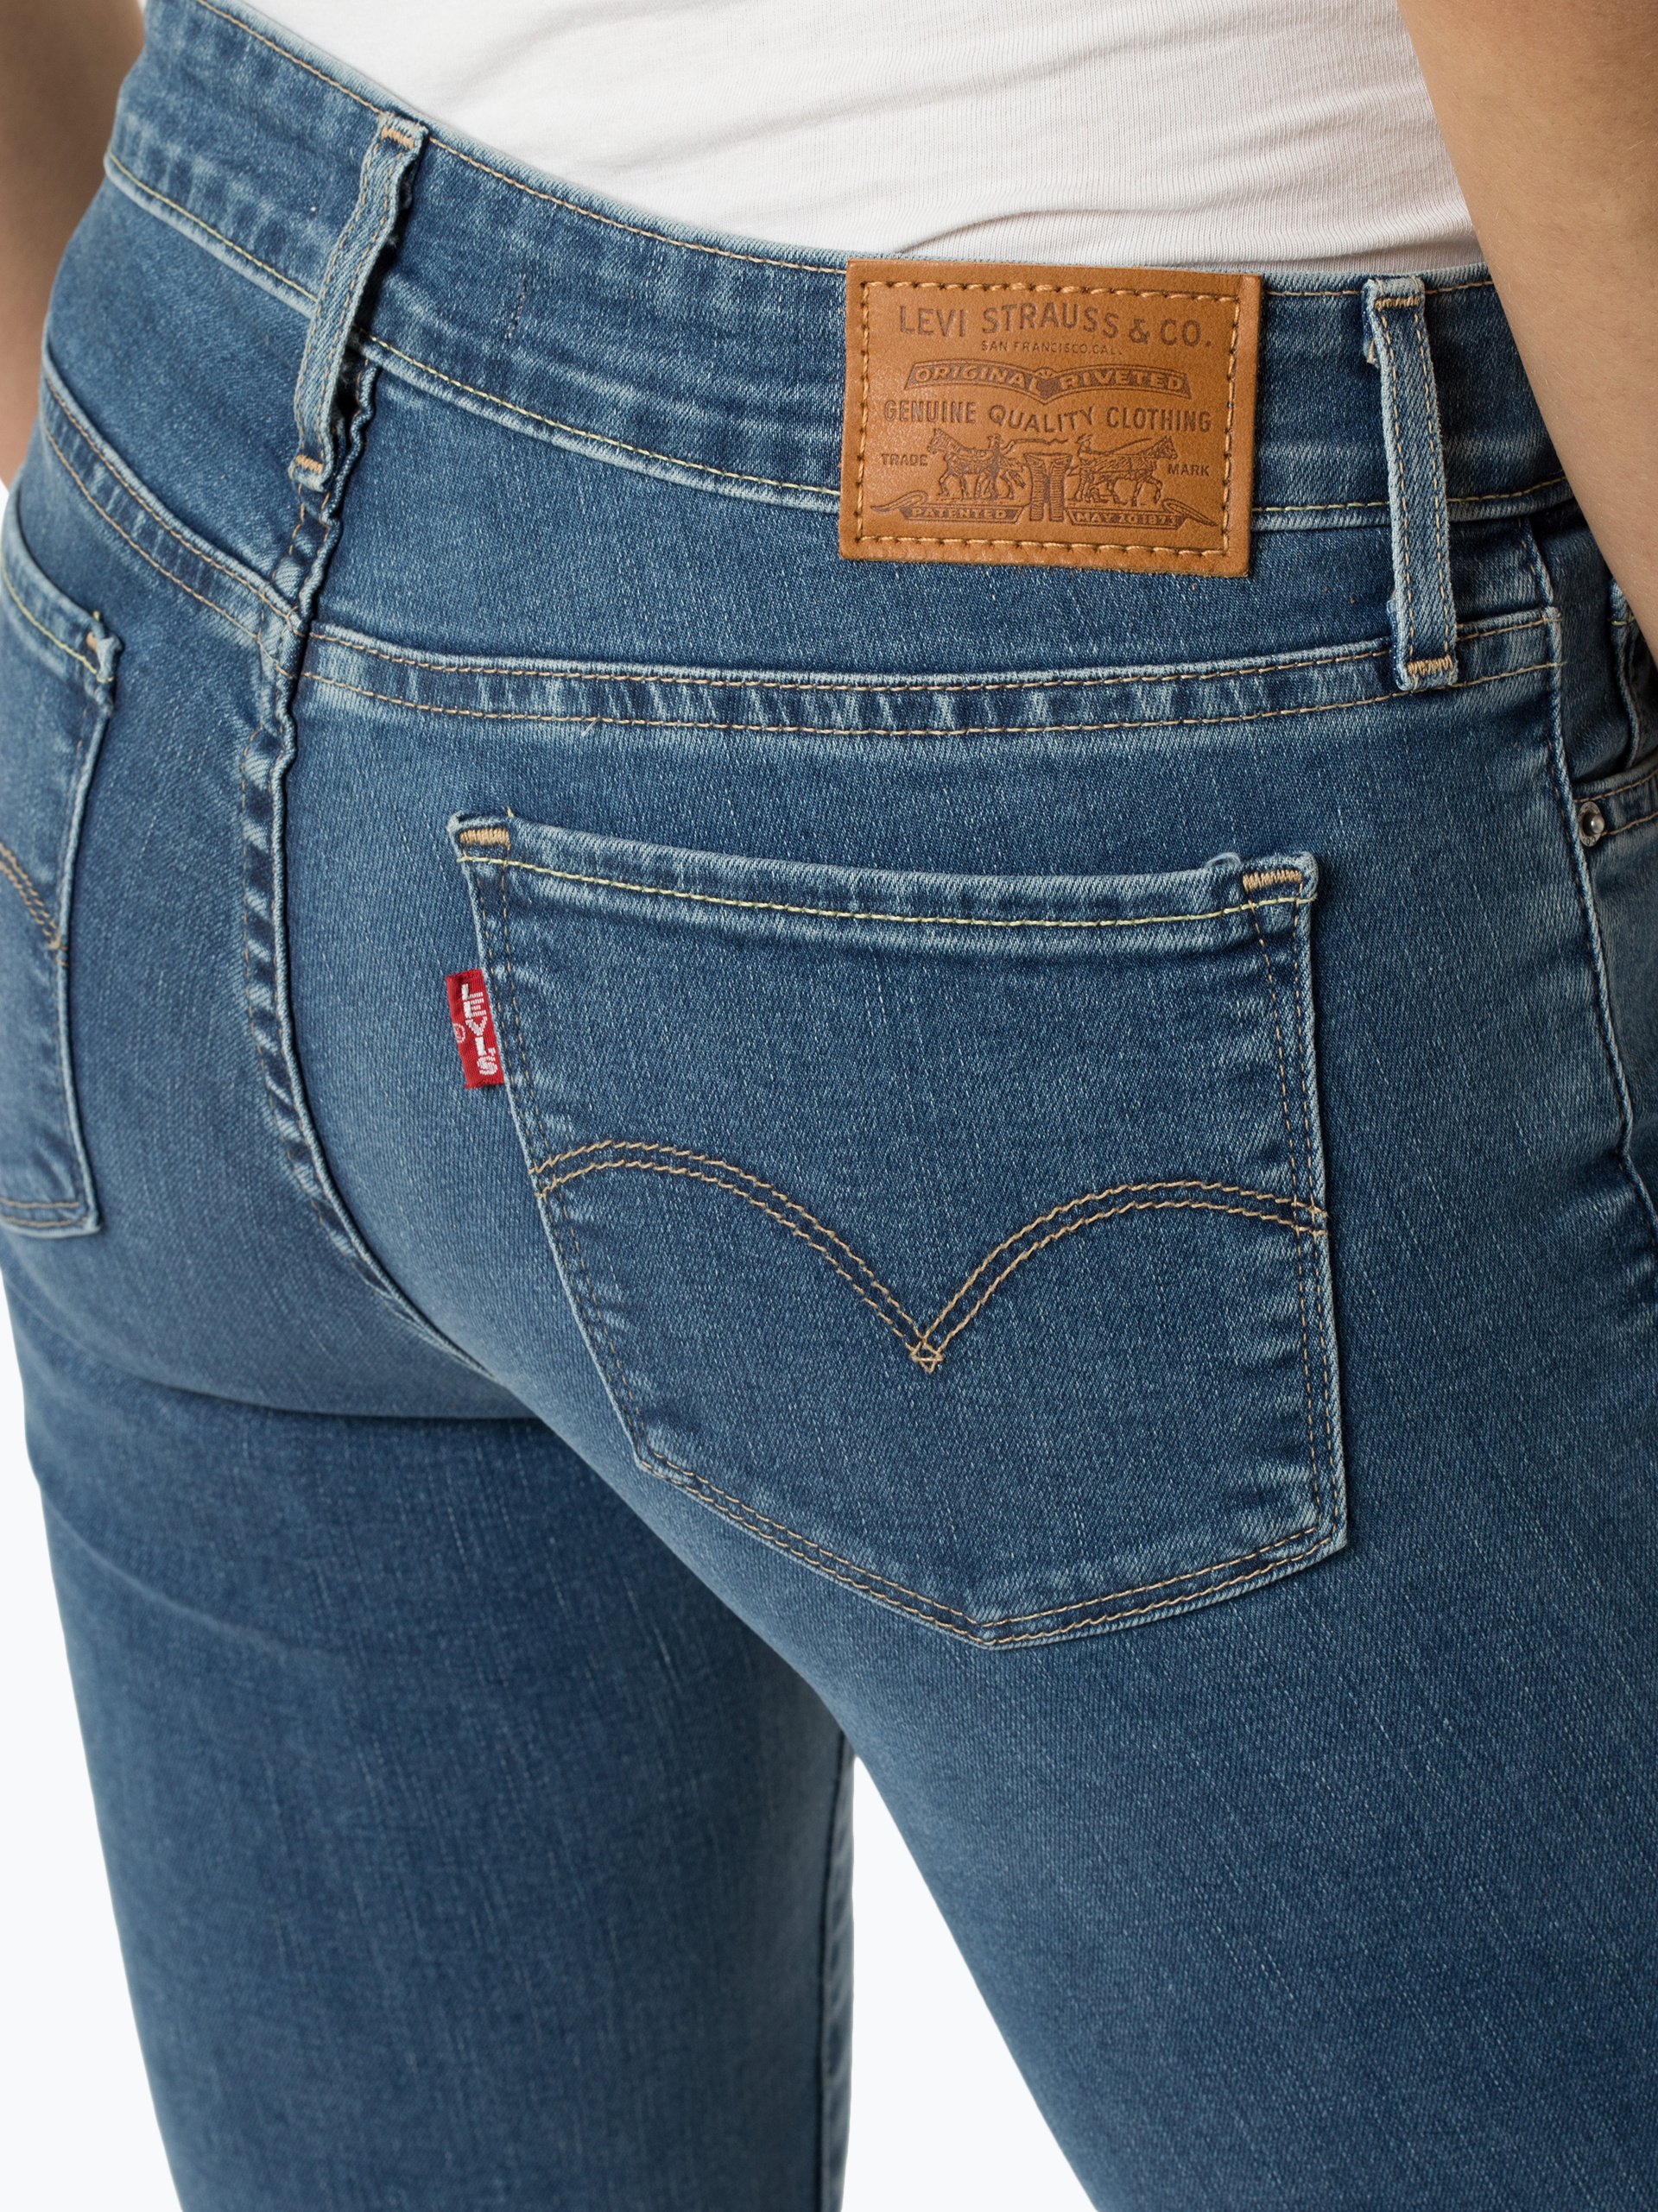 Levis 501 Jeans Damen Sale | NAR Media Kit